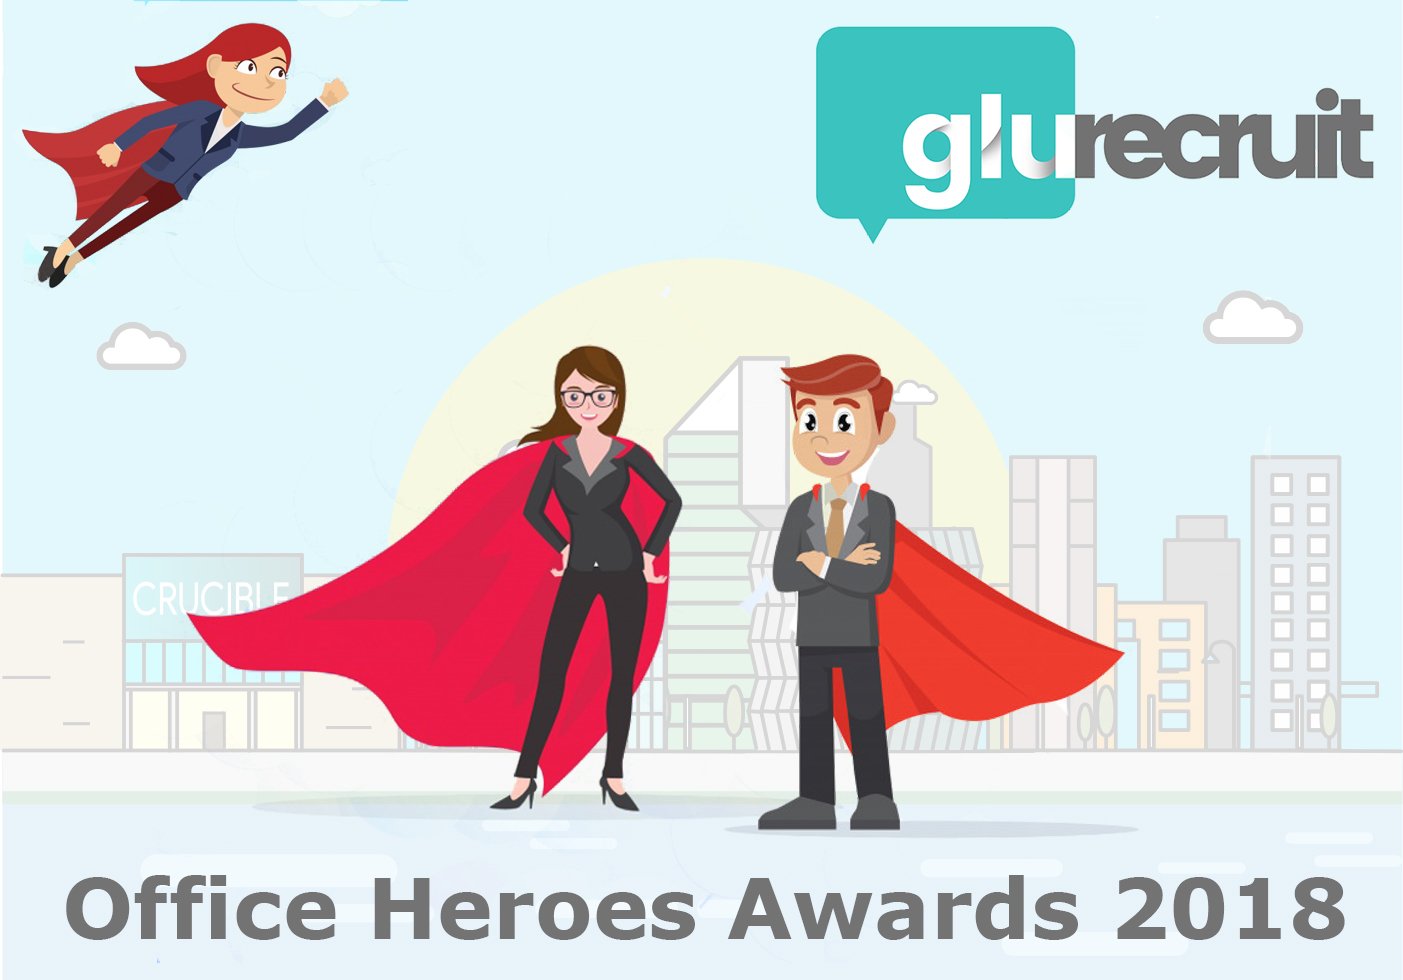 Glu Recruit’s Office Heroes Awards 2018